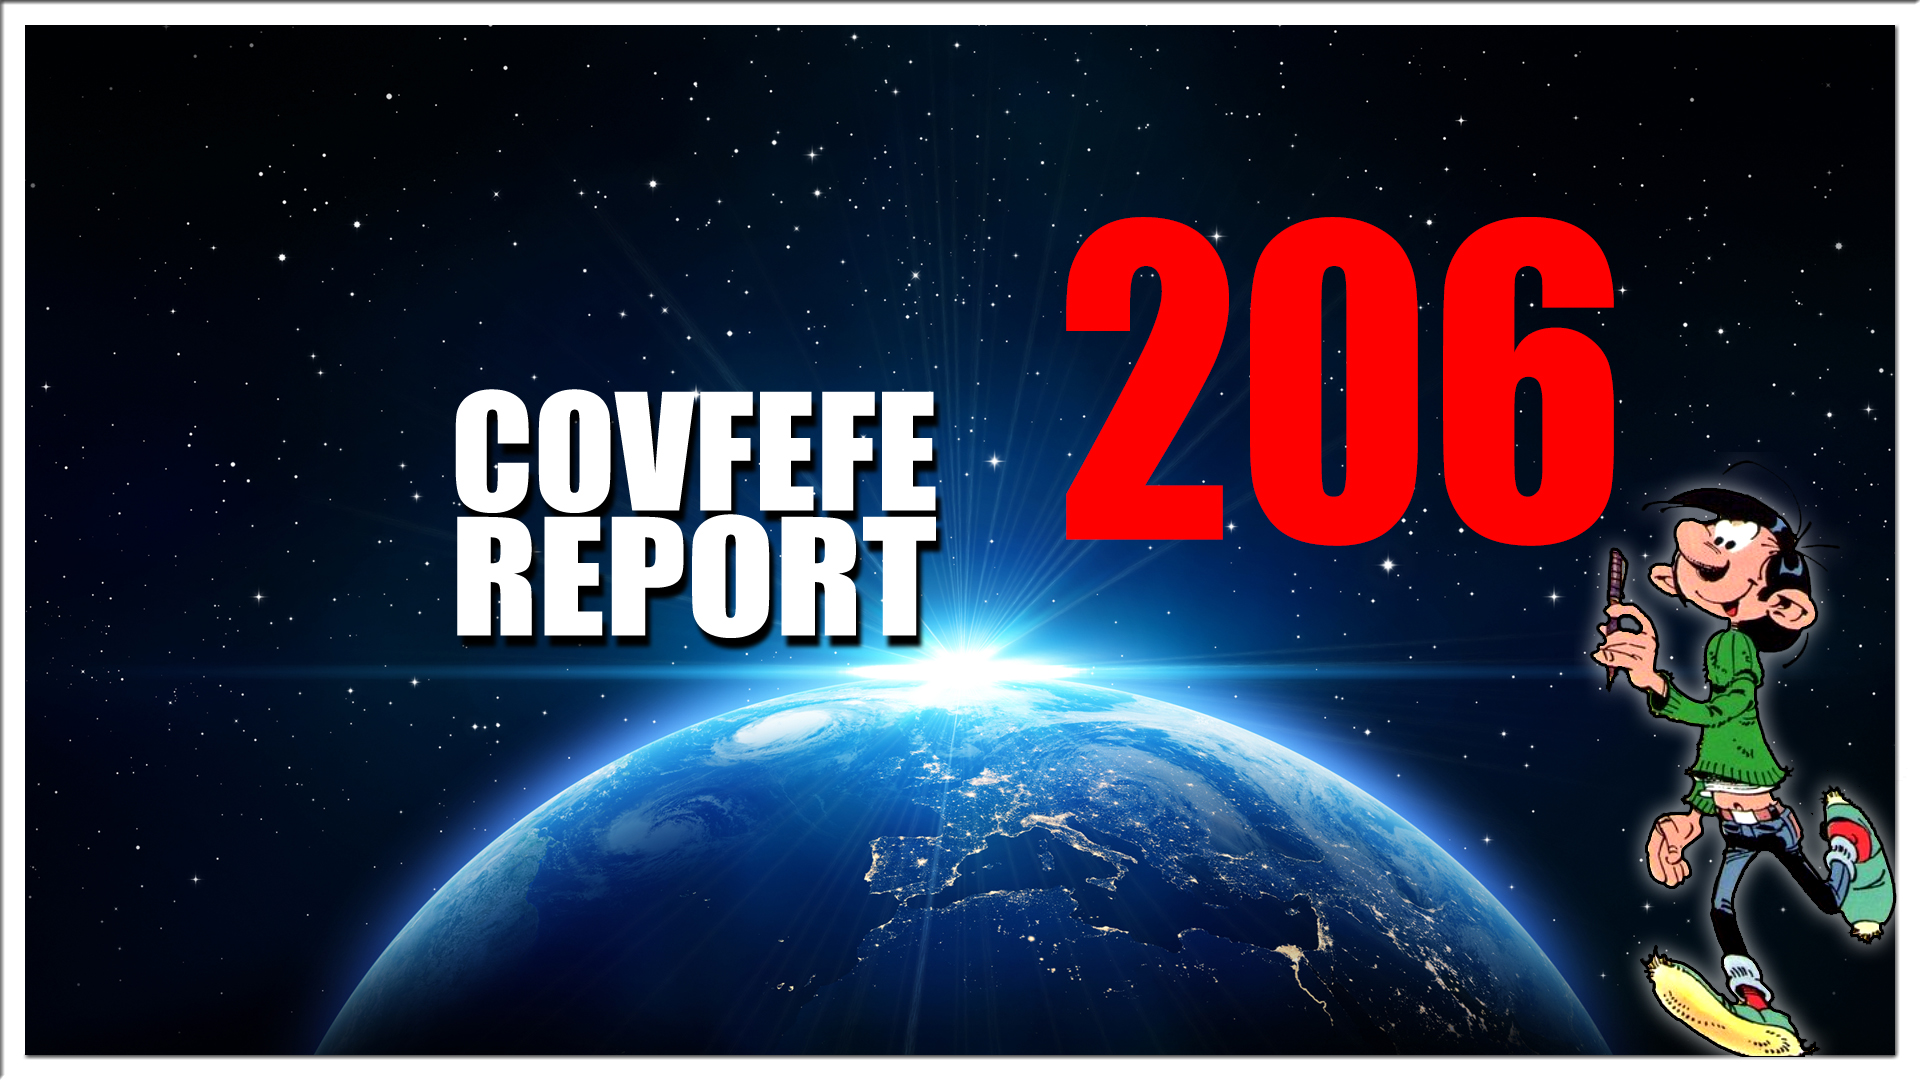 Covfefe Report 206. ngt